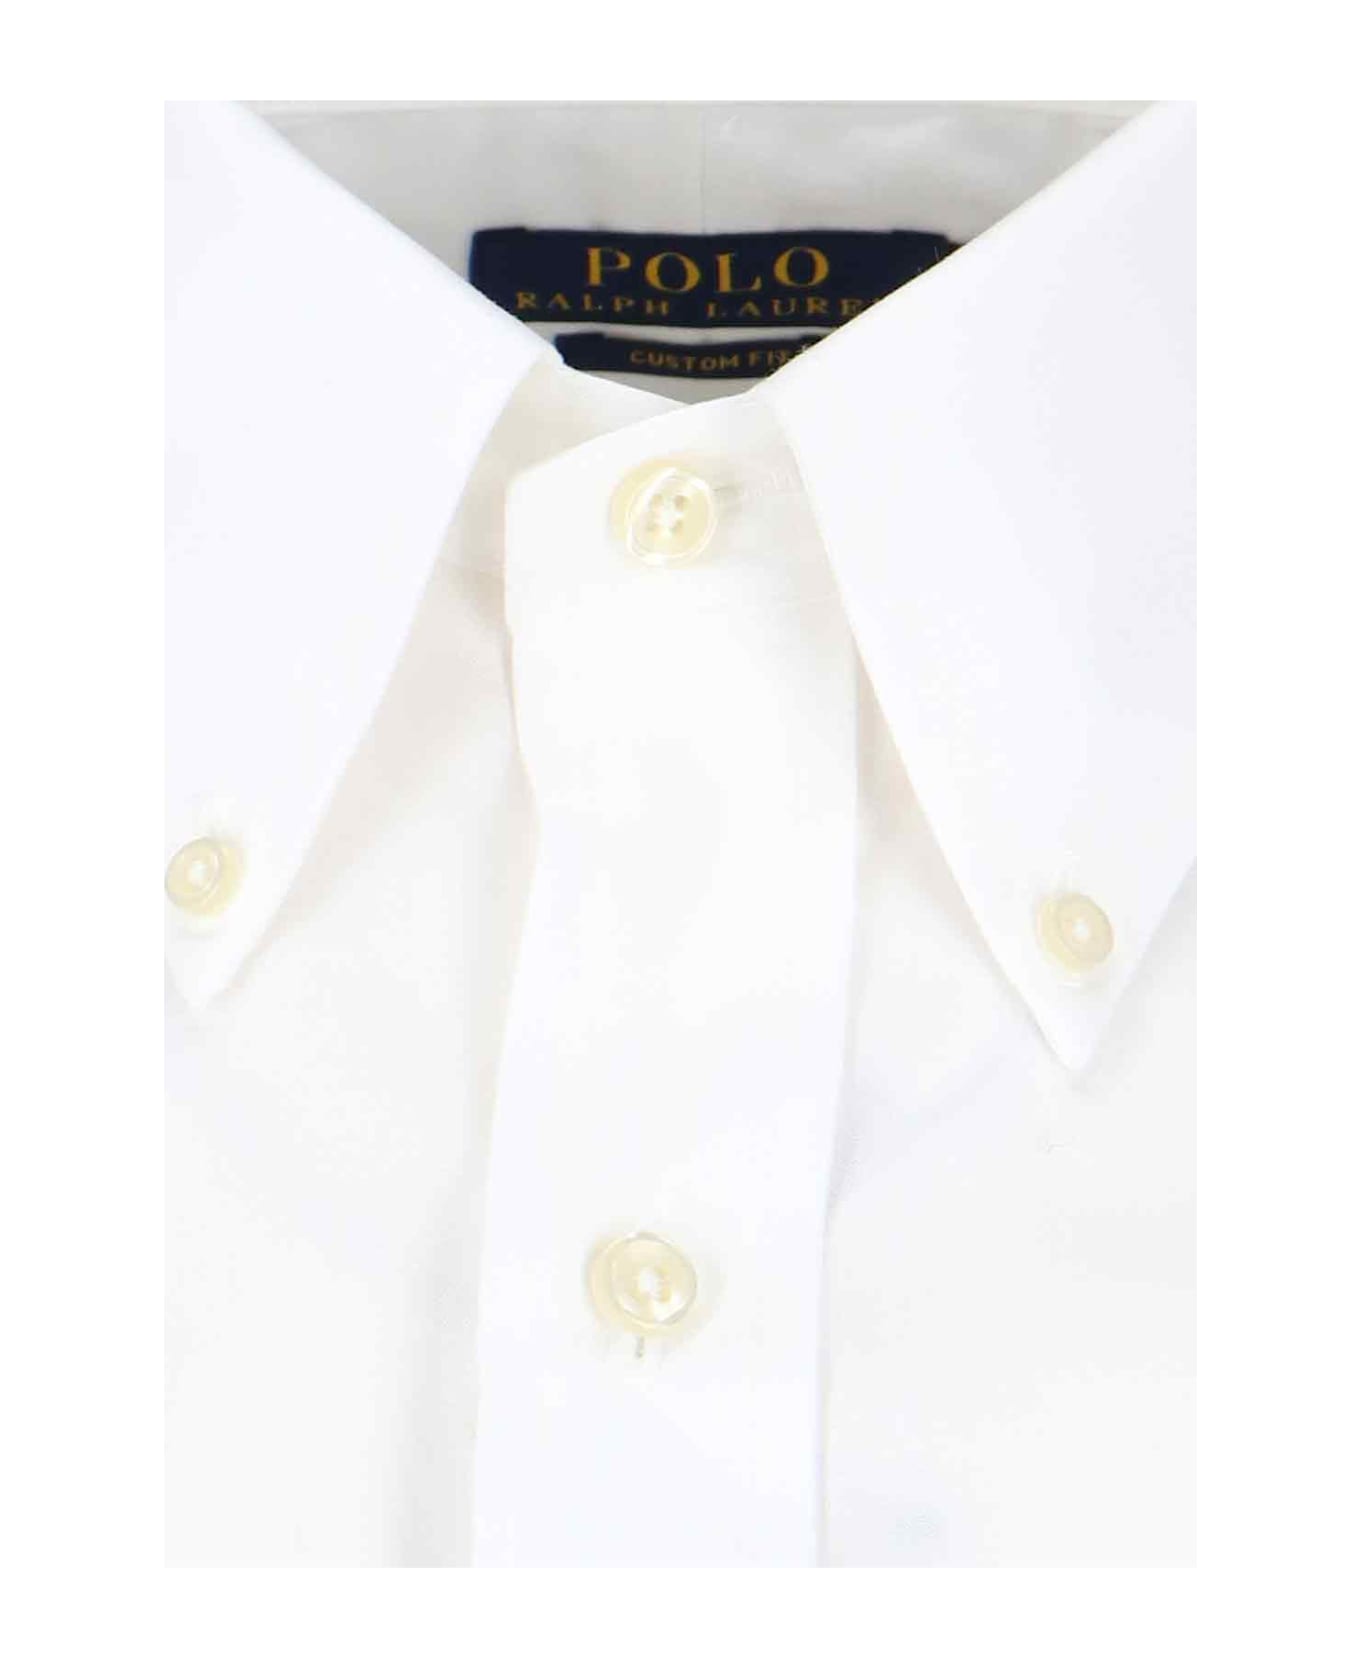 Polo Ralph Lauren Oxford Shirt - White